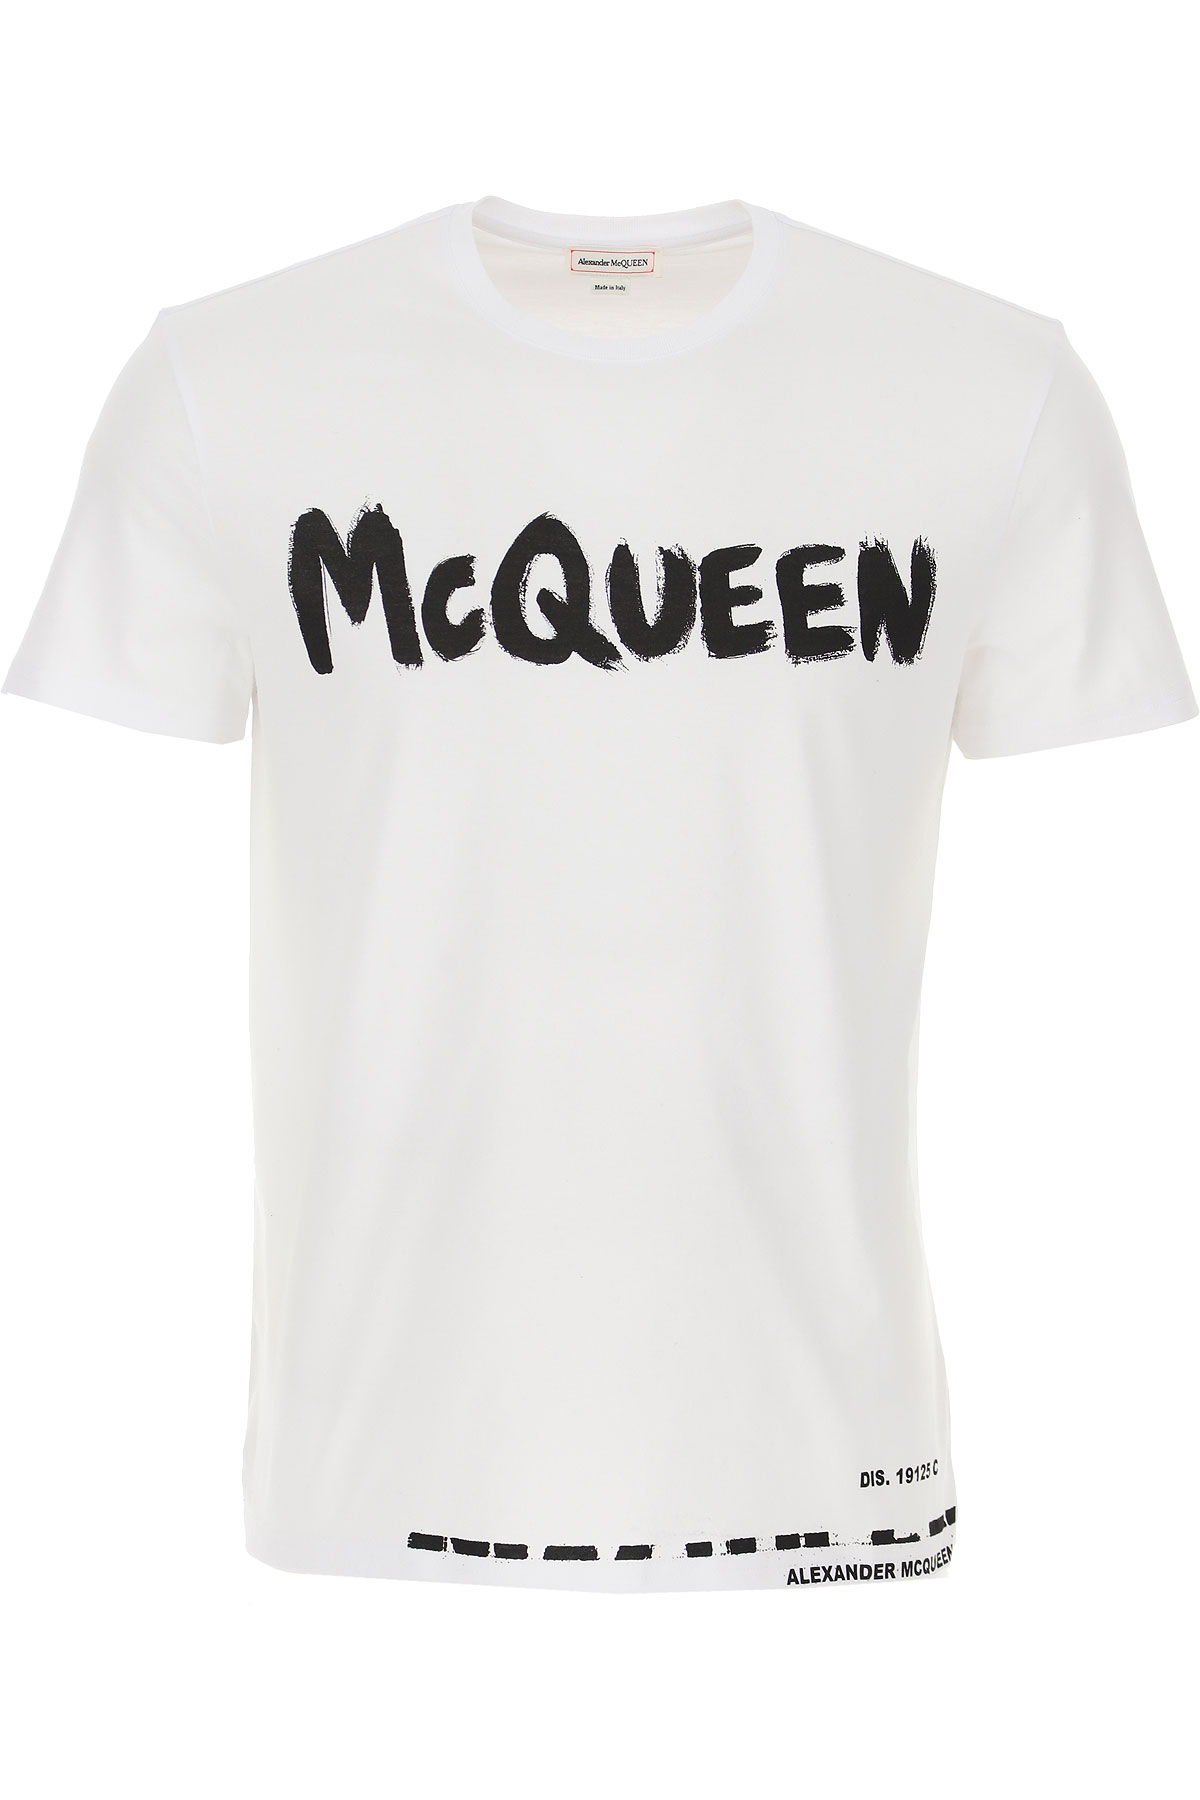 Mens Clothing Alexander McQueen, Style code: 622104-qsz57-0900